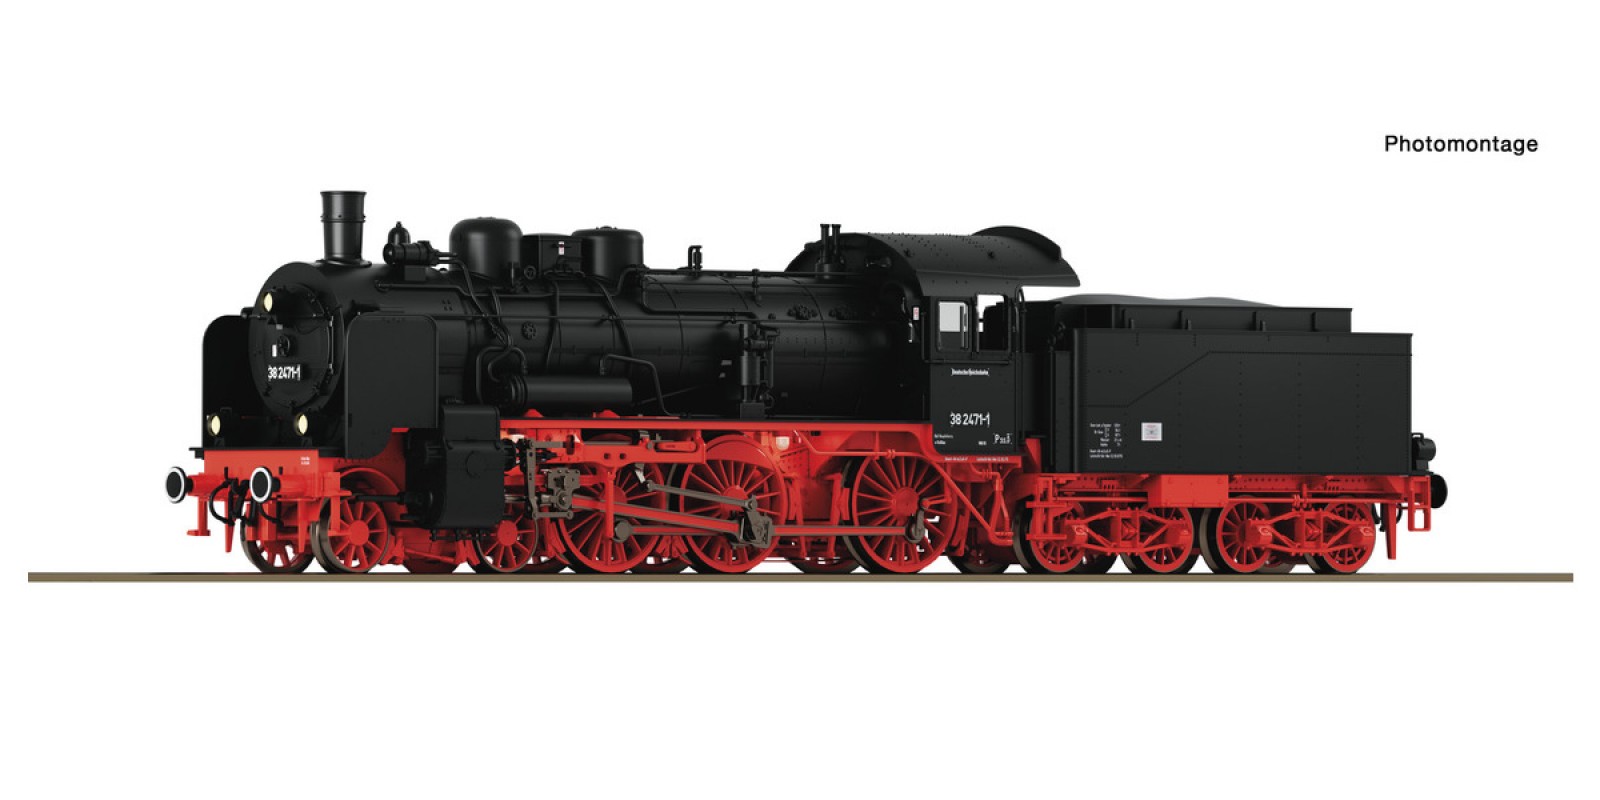 RO79382 Steam locomotive class 38